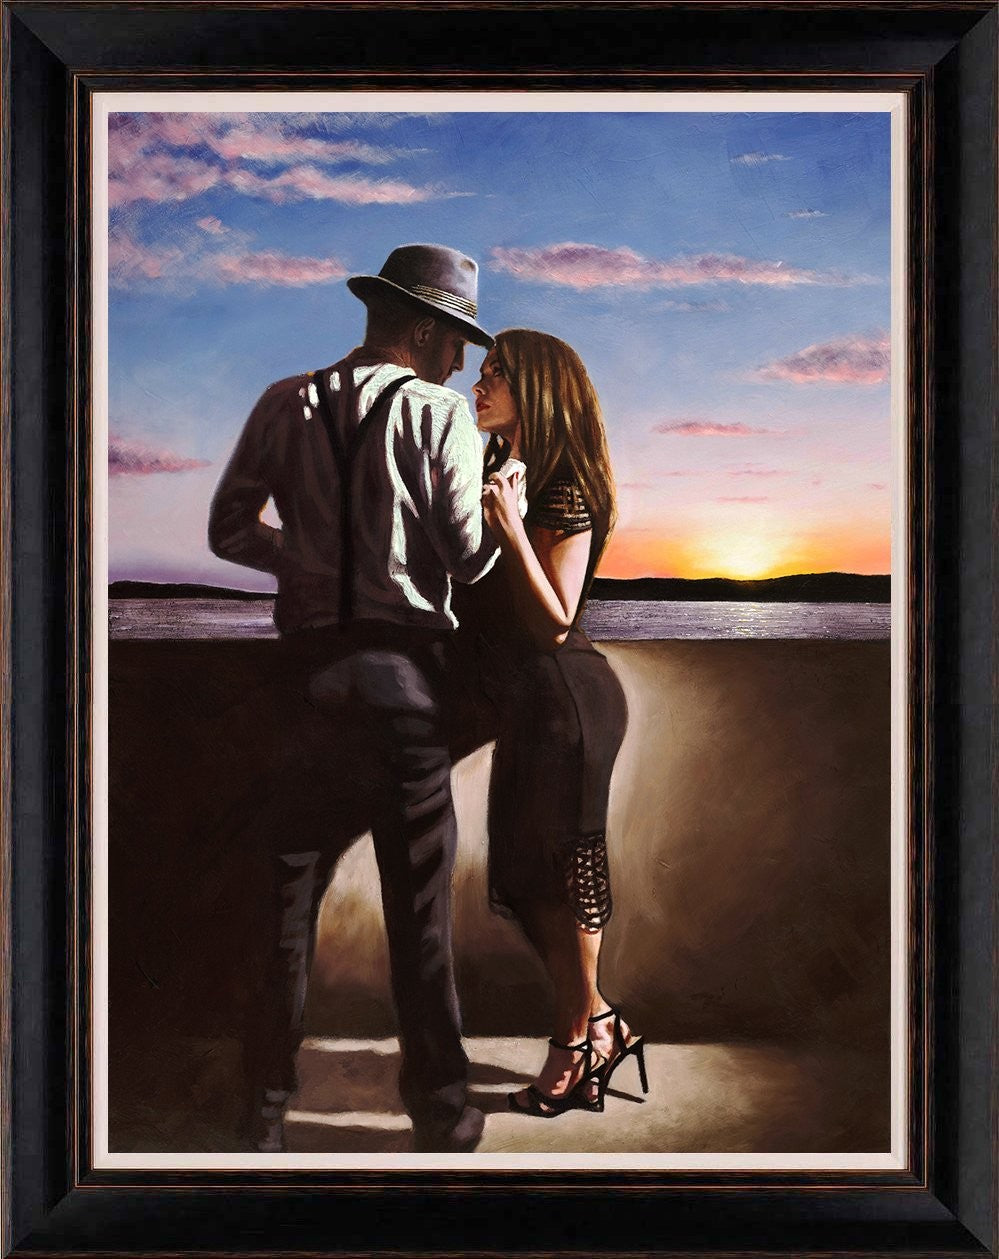 Richard Blunt - 'Is This Love' - Framed Original Artwork